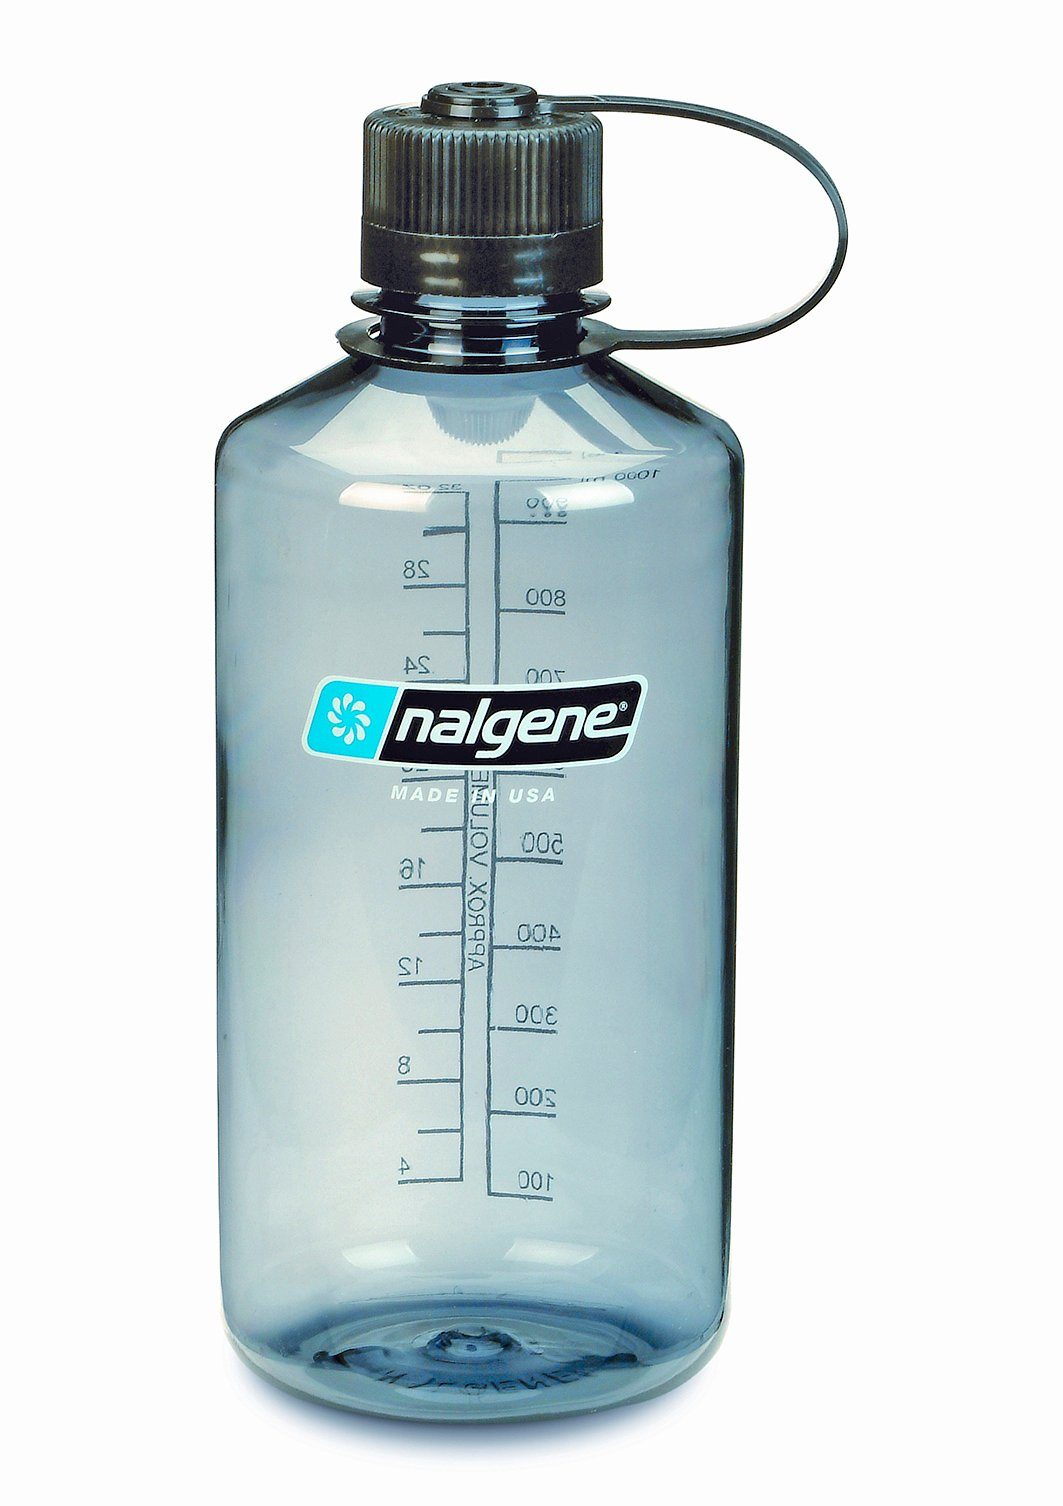 'EH' Nalgene grau Trinkflasche Nalgene - Trinkflasche L 1